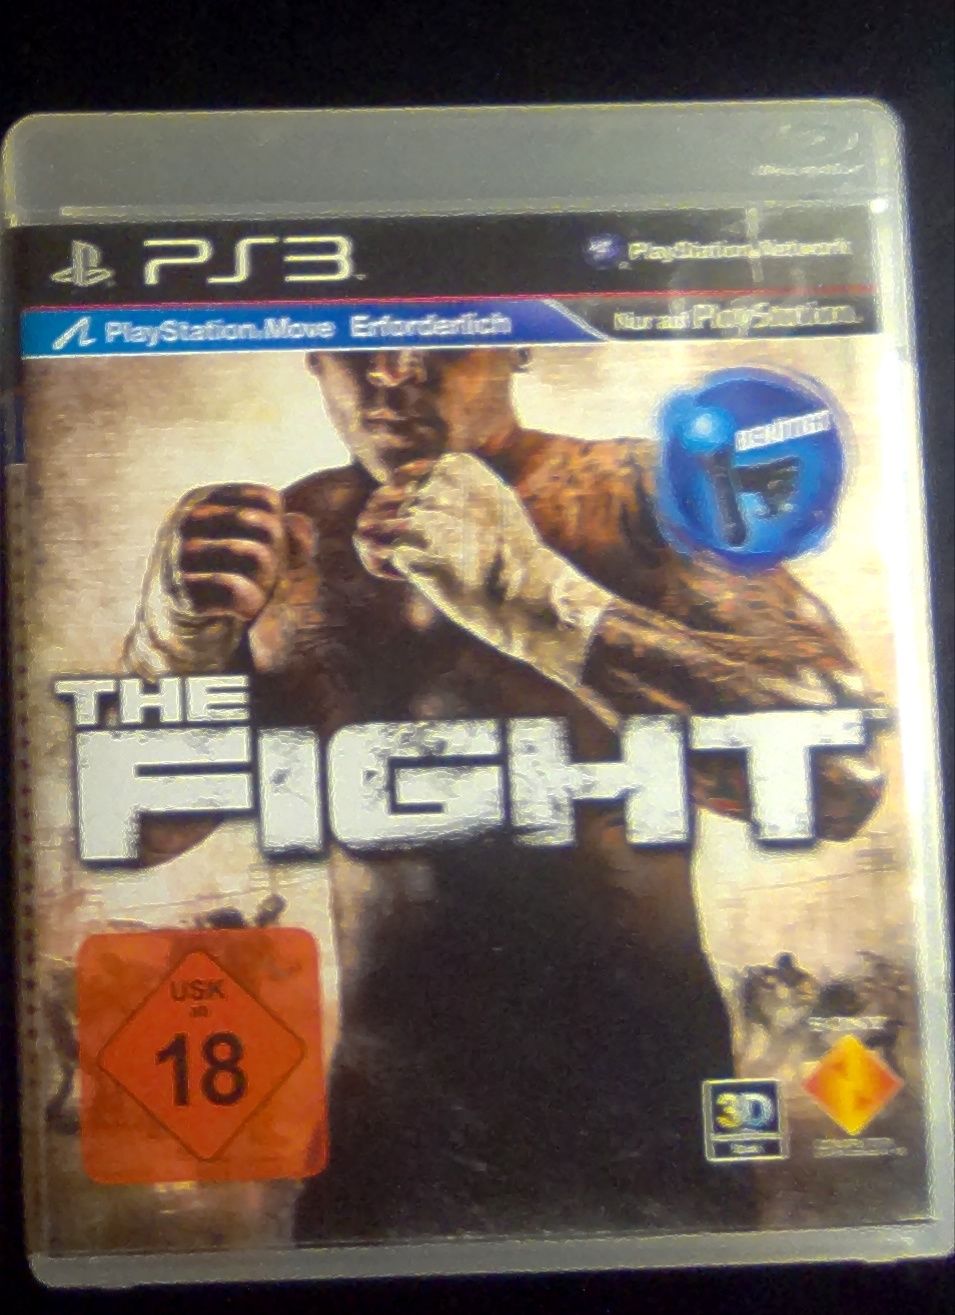 Jogo para PS3 The fight / PS3 move